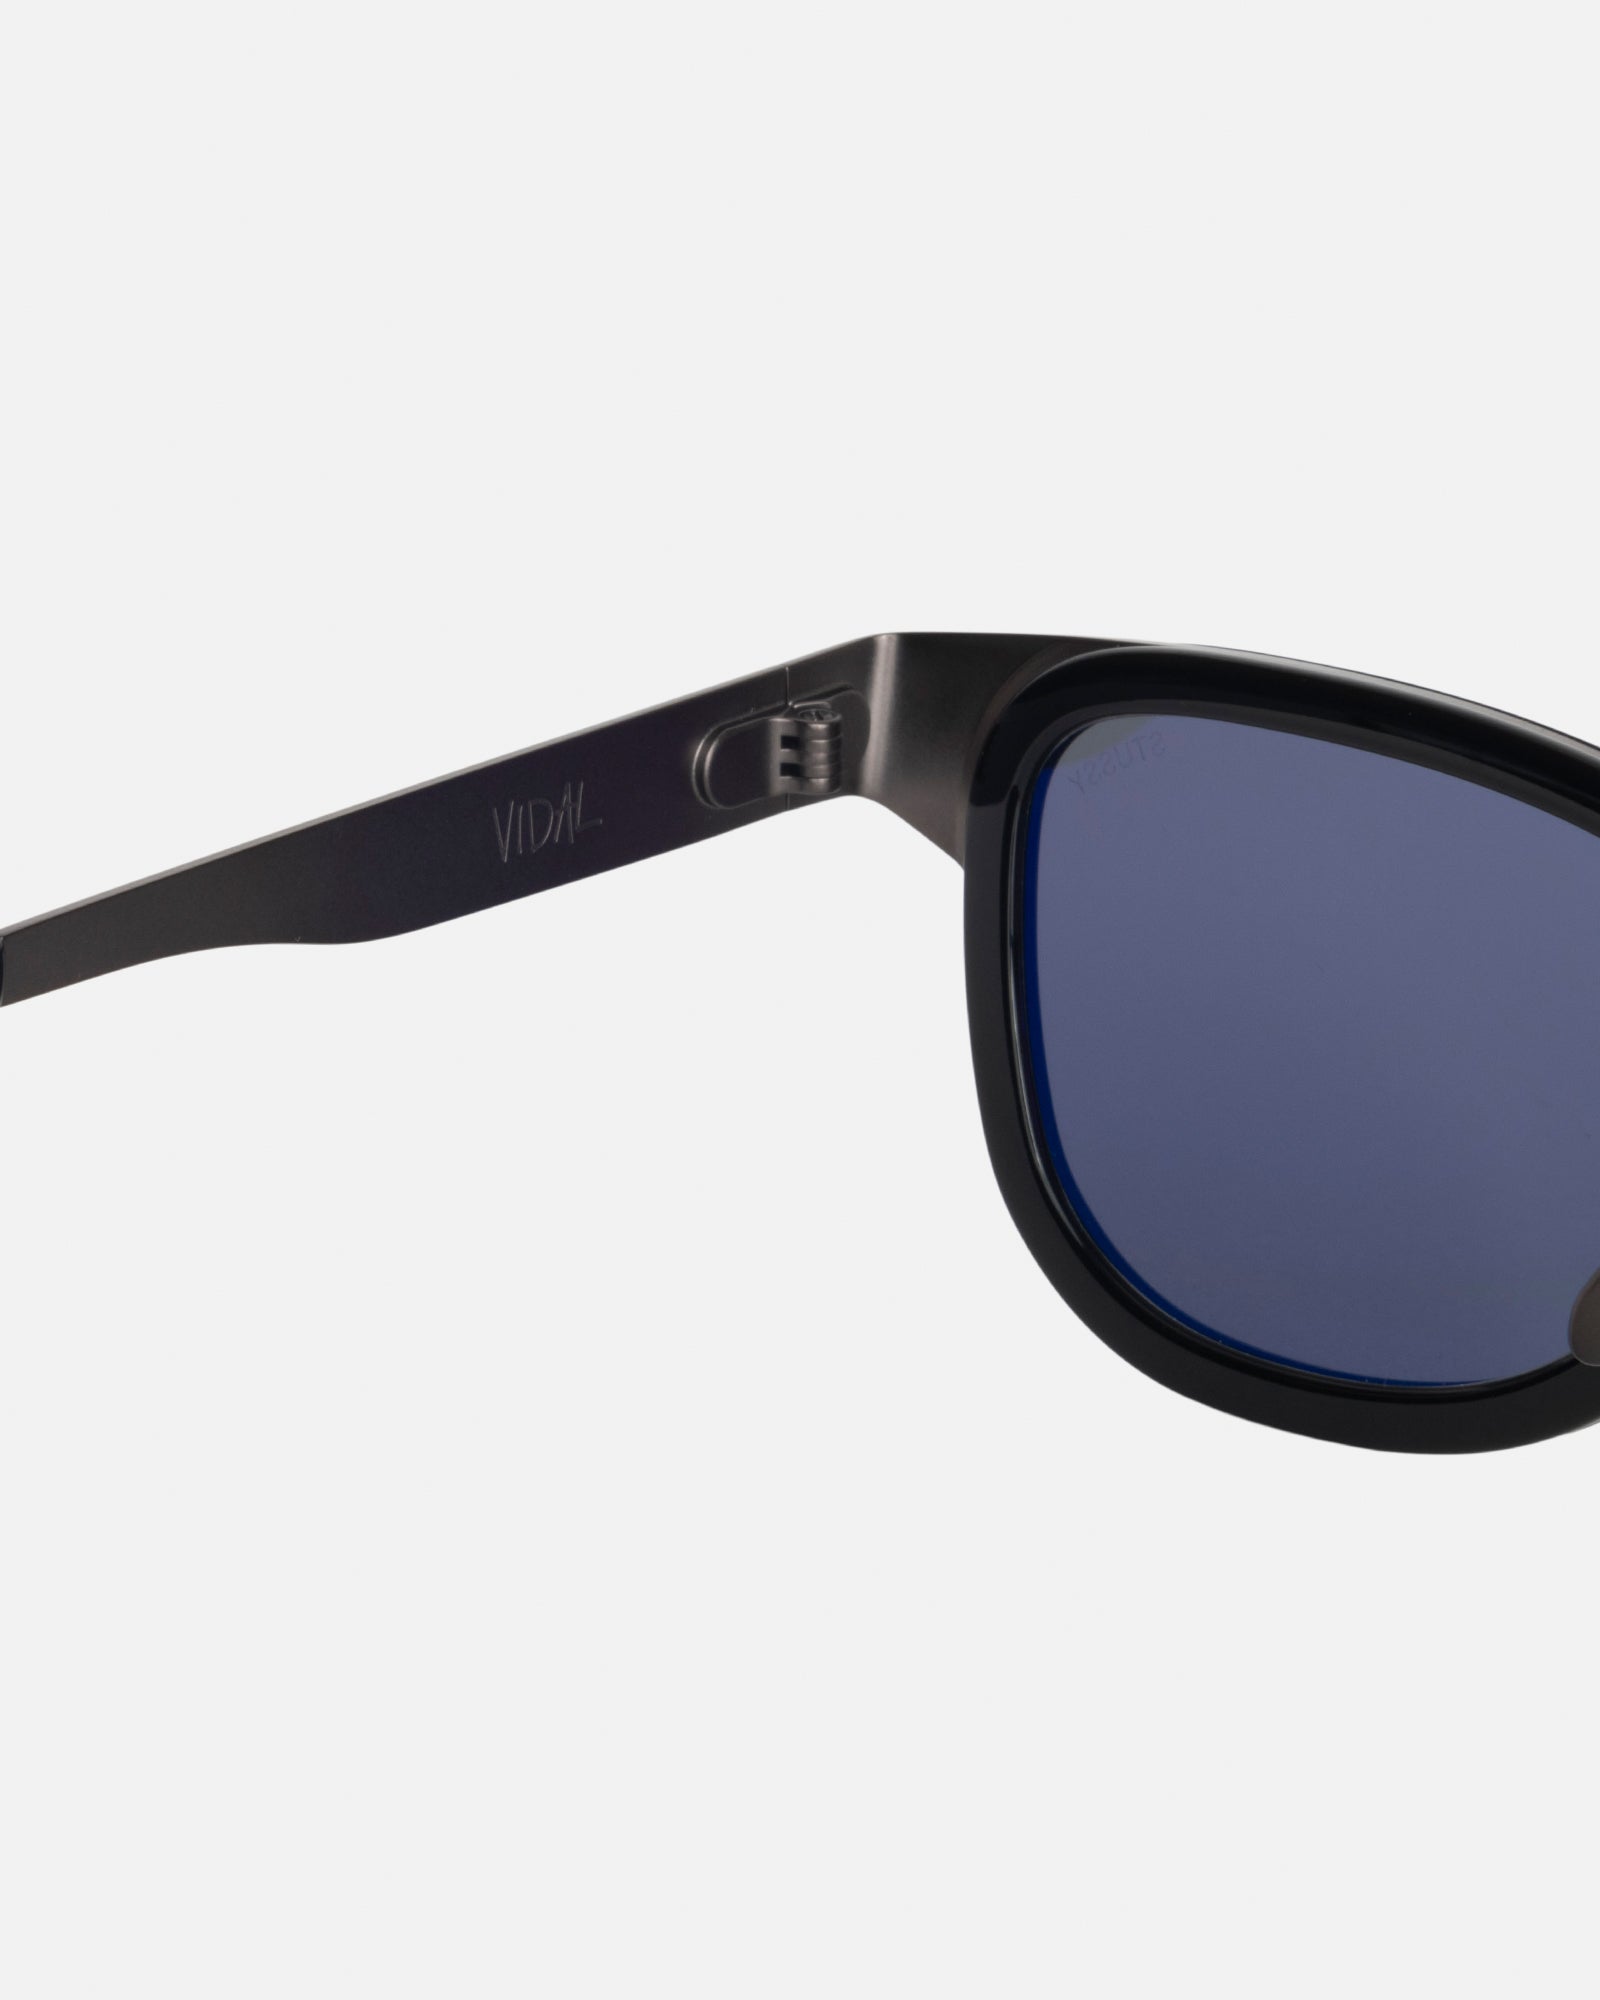 Vidal Sunglasses in gunmetal / black / black – Stüssy